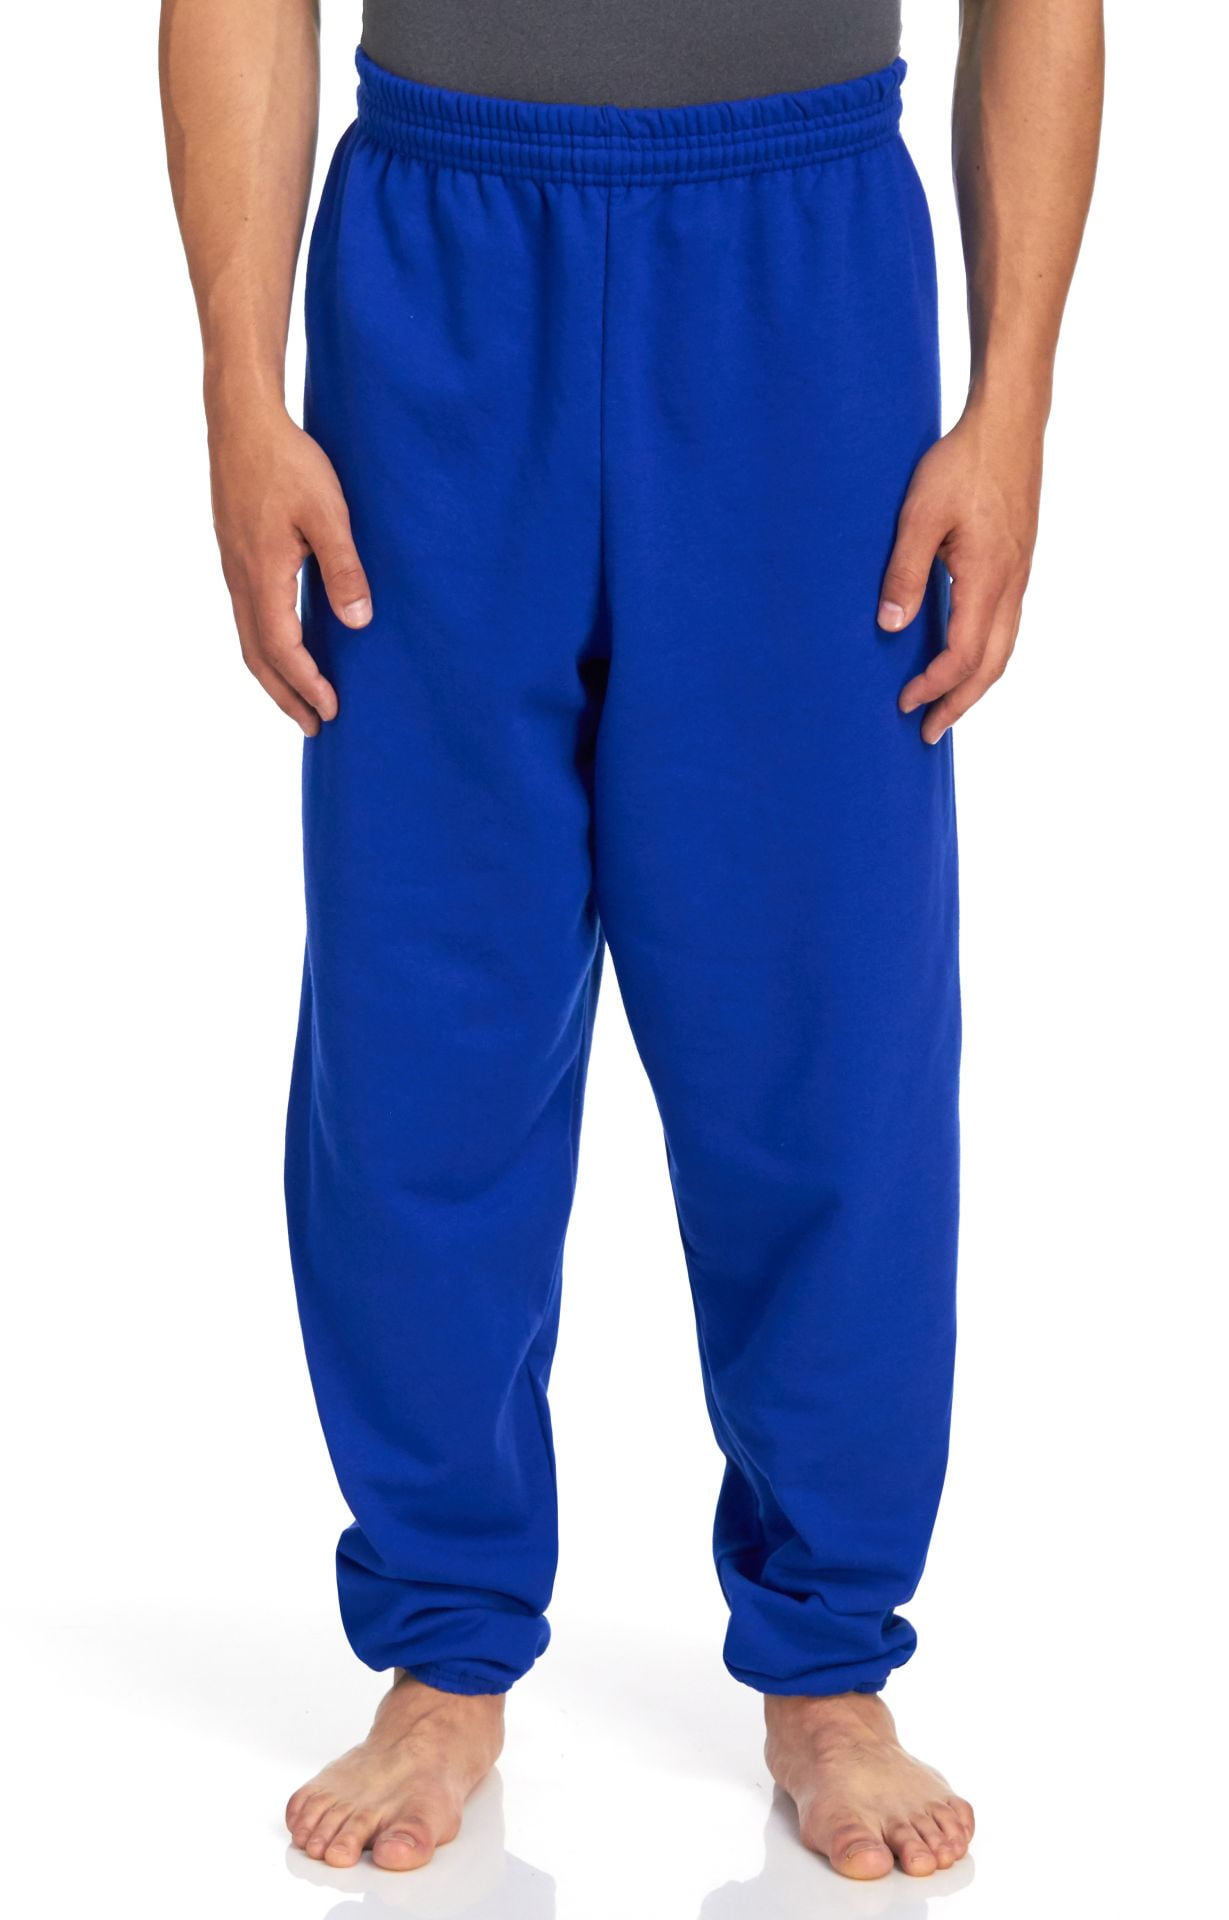 Hanes Men's ComfortBlend EcoSmart Sweatpants, Deep Royal, Medium